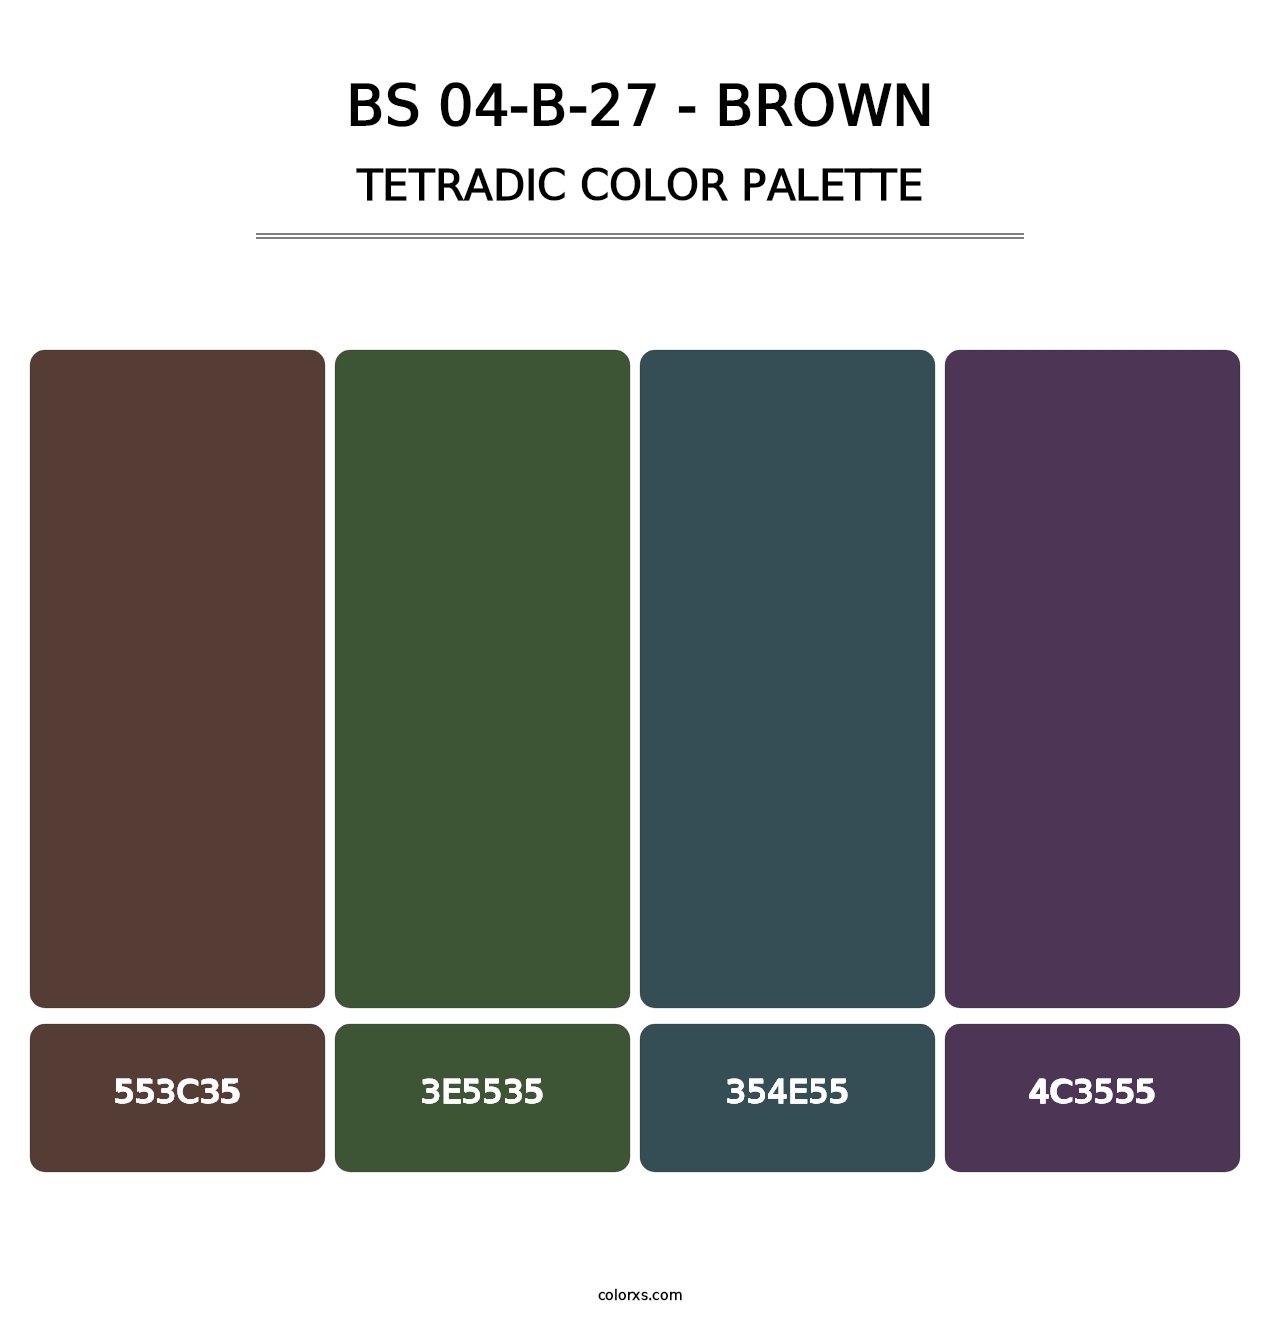 BS 04-B-27 - Brown - Tetradic Color Palette